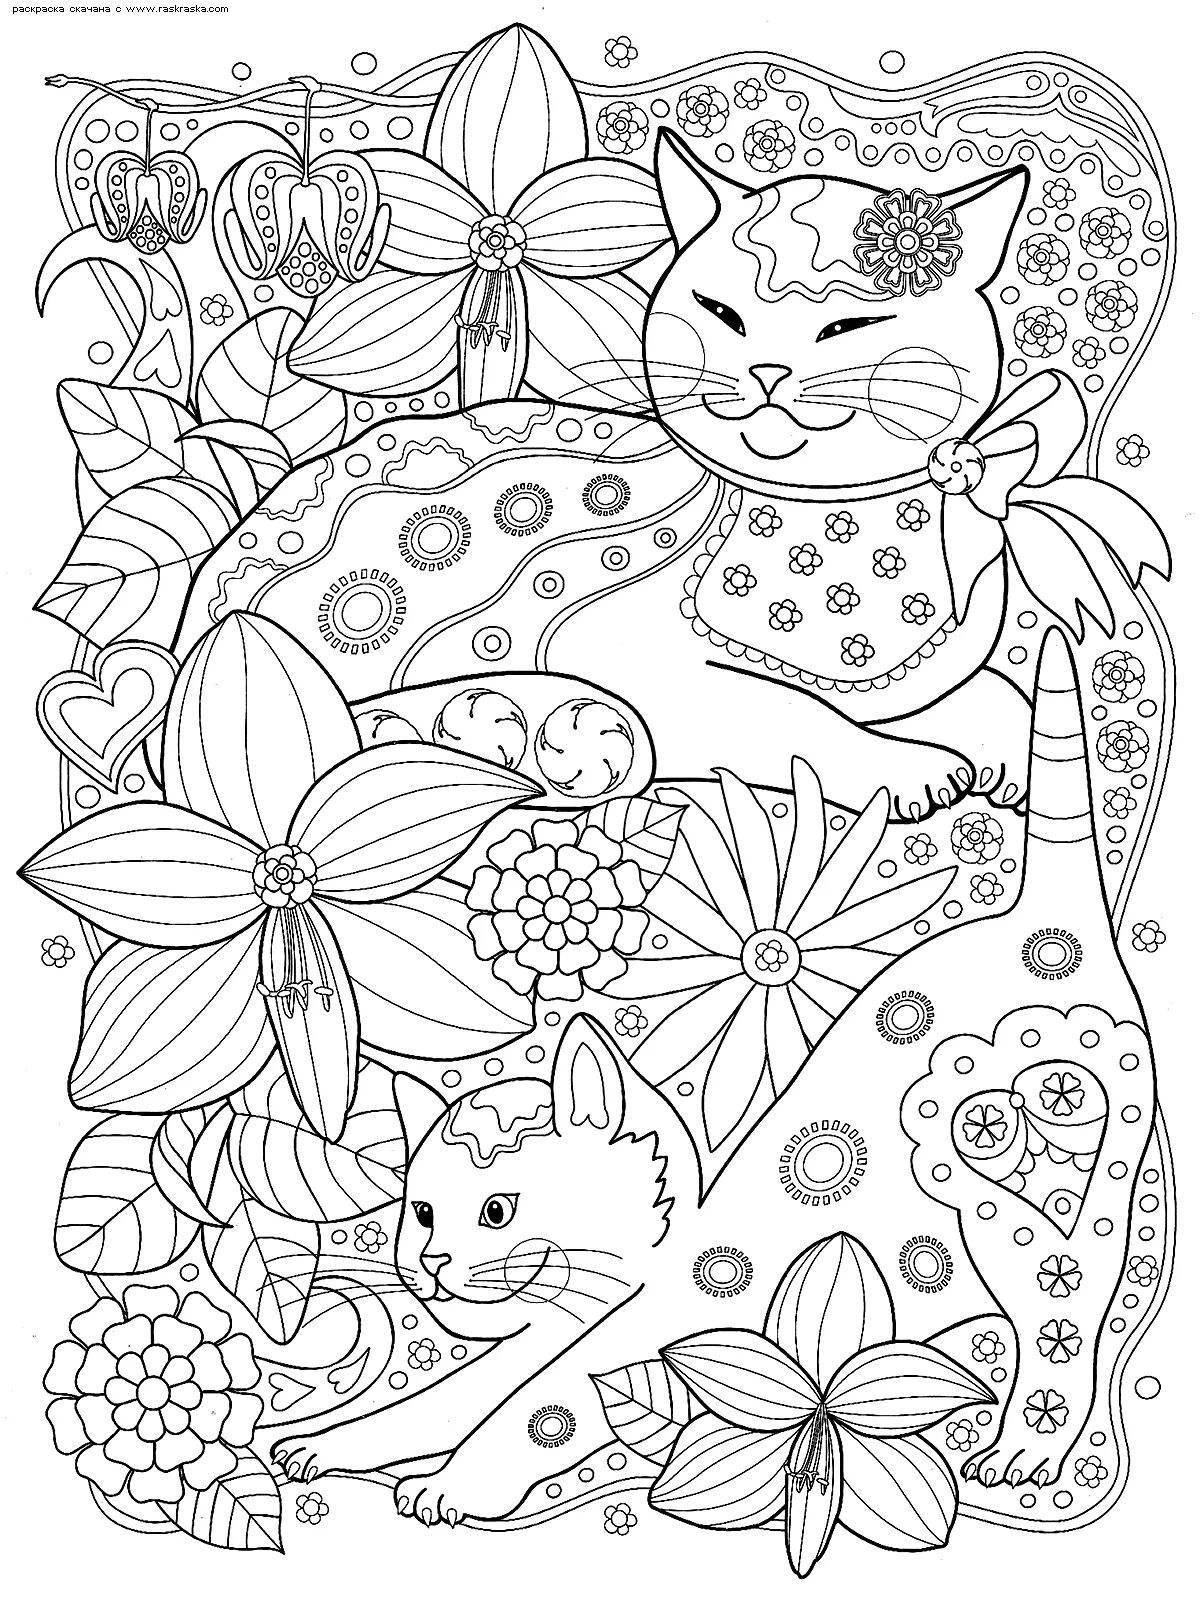 Delightful anti-stress kitten coloring book